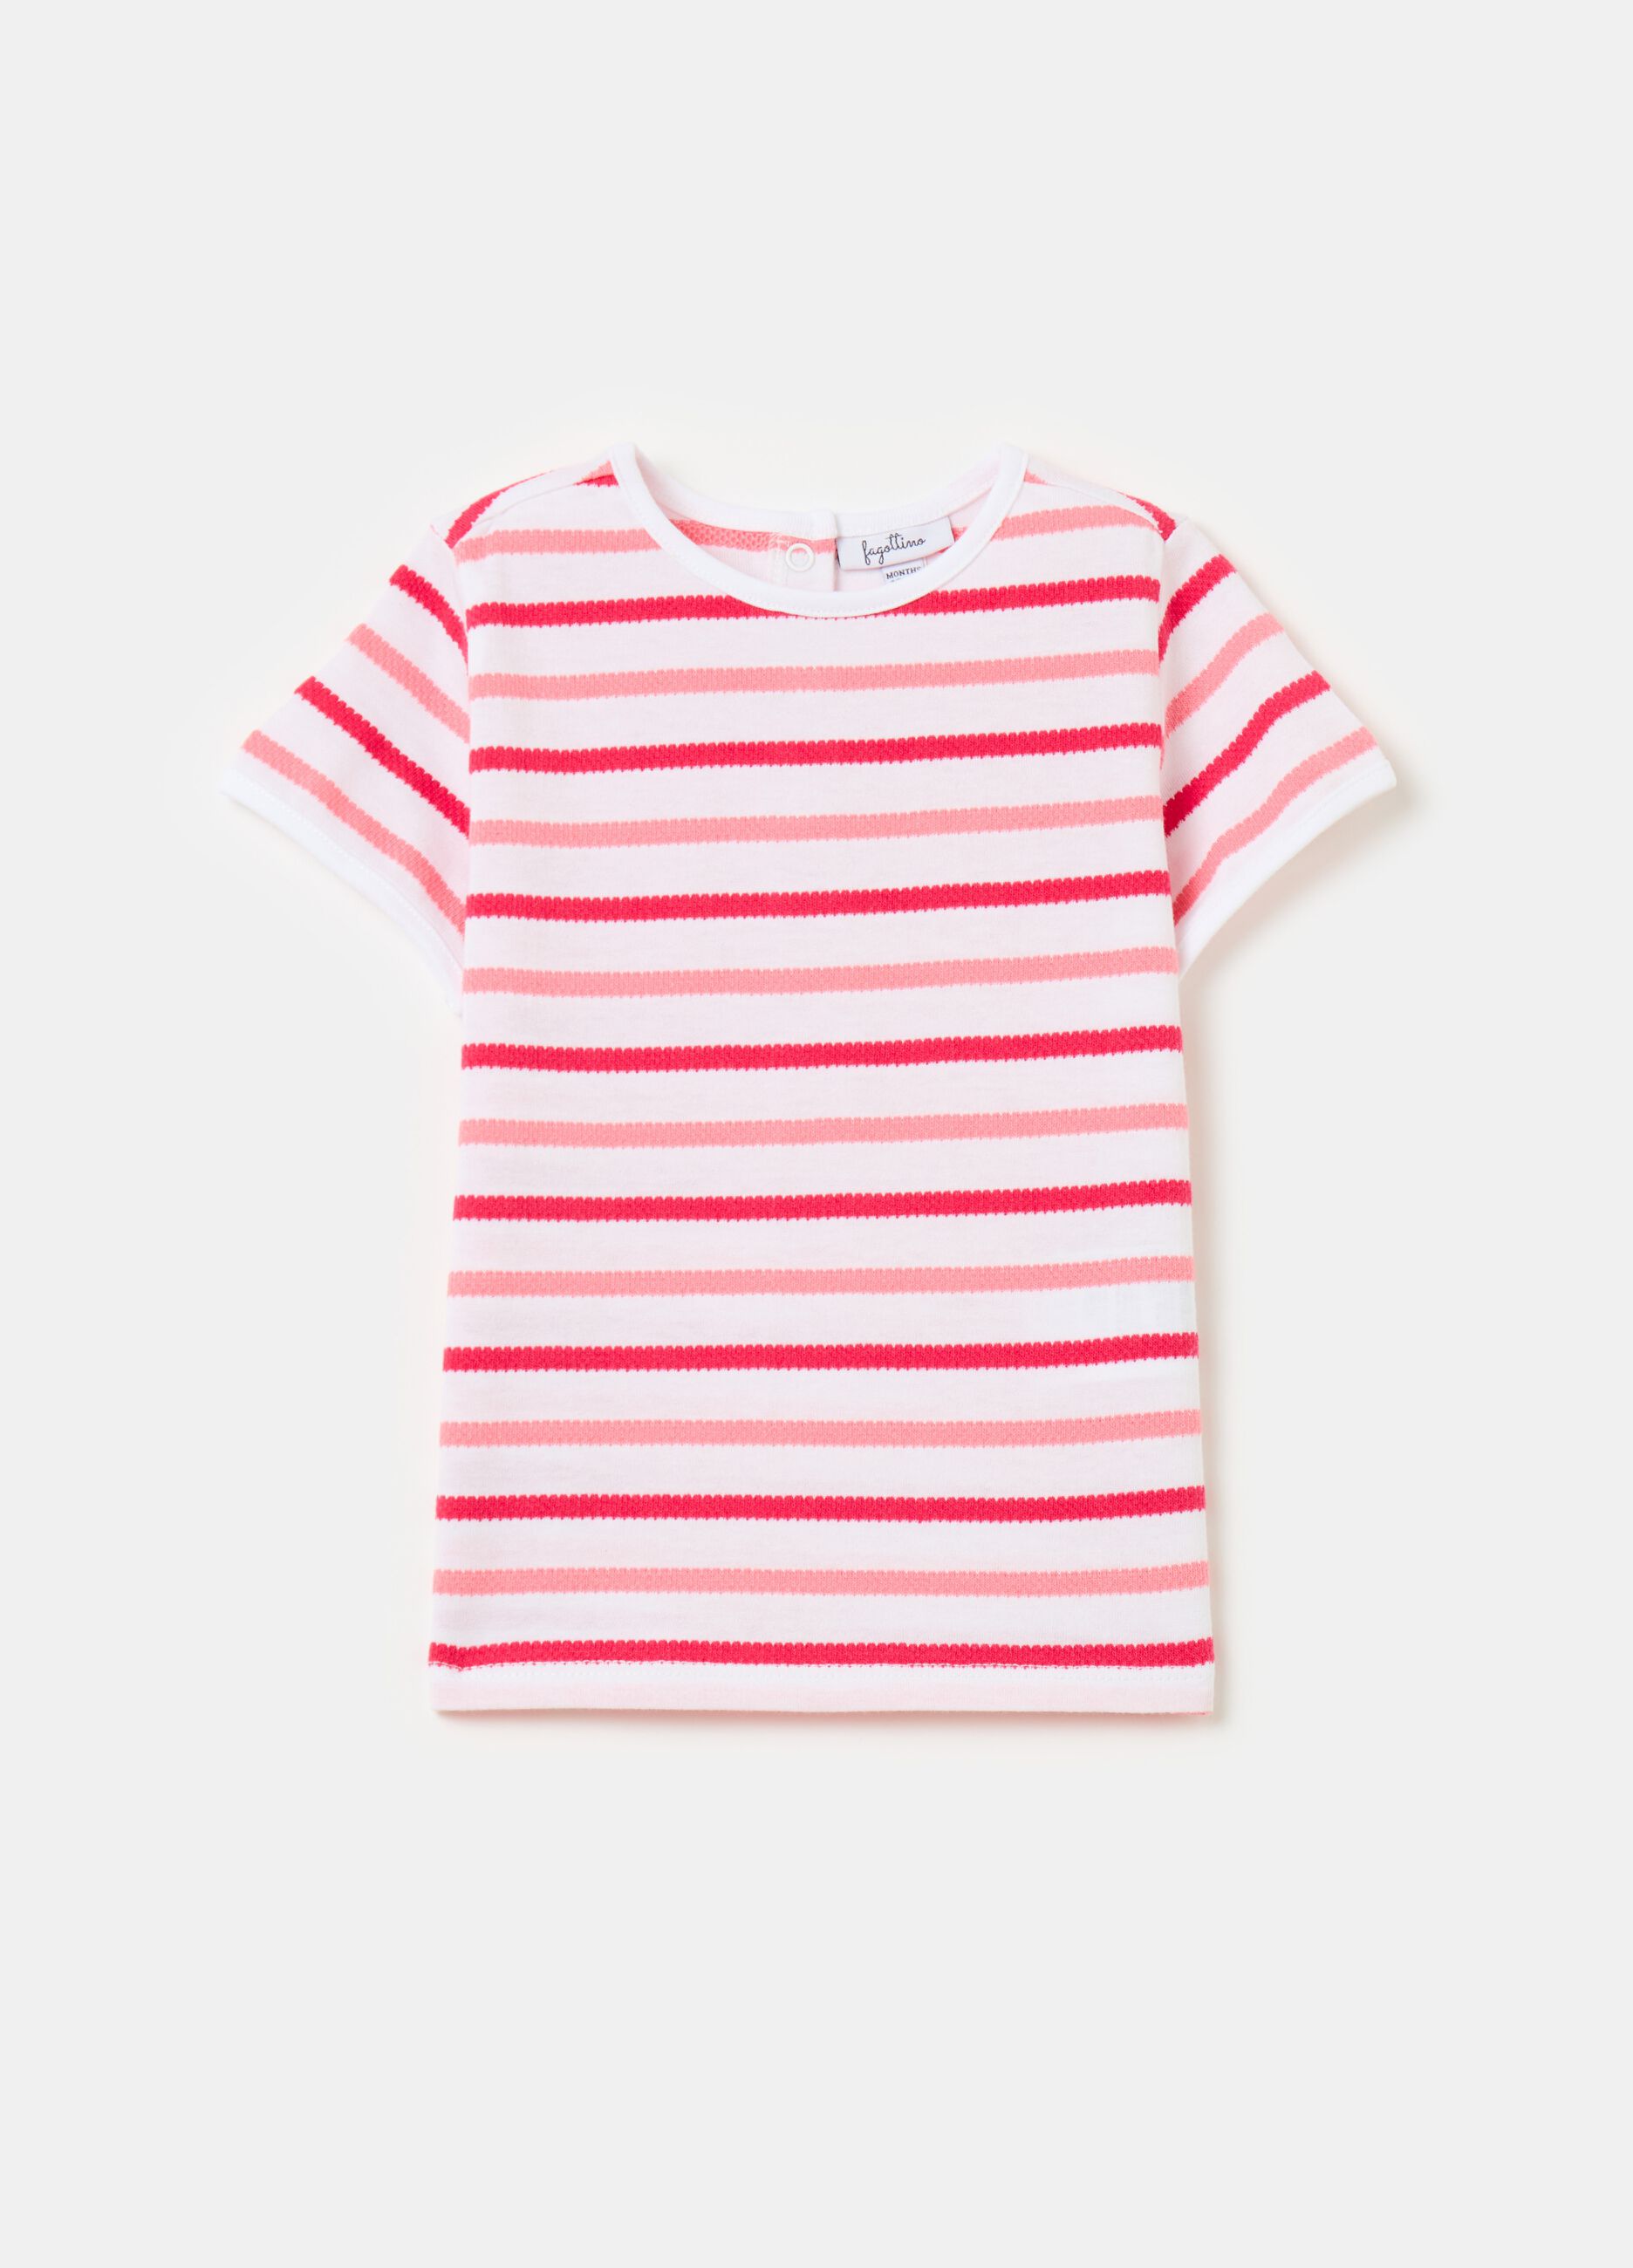 Jacquard t-shirt with striped pattern